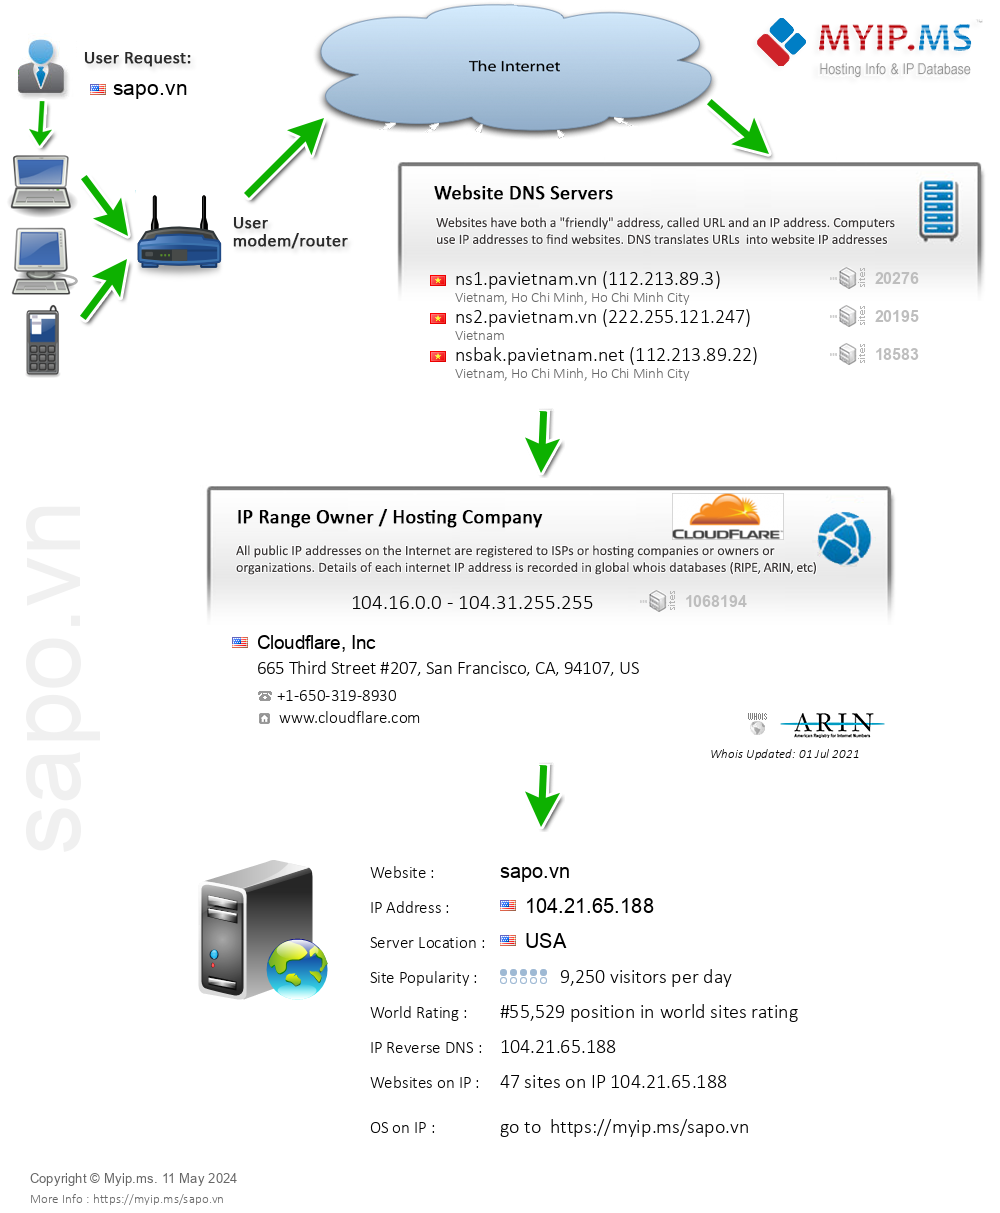 Sapo.vn - Website Hosting Visual IP Diagram